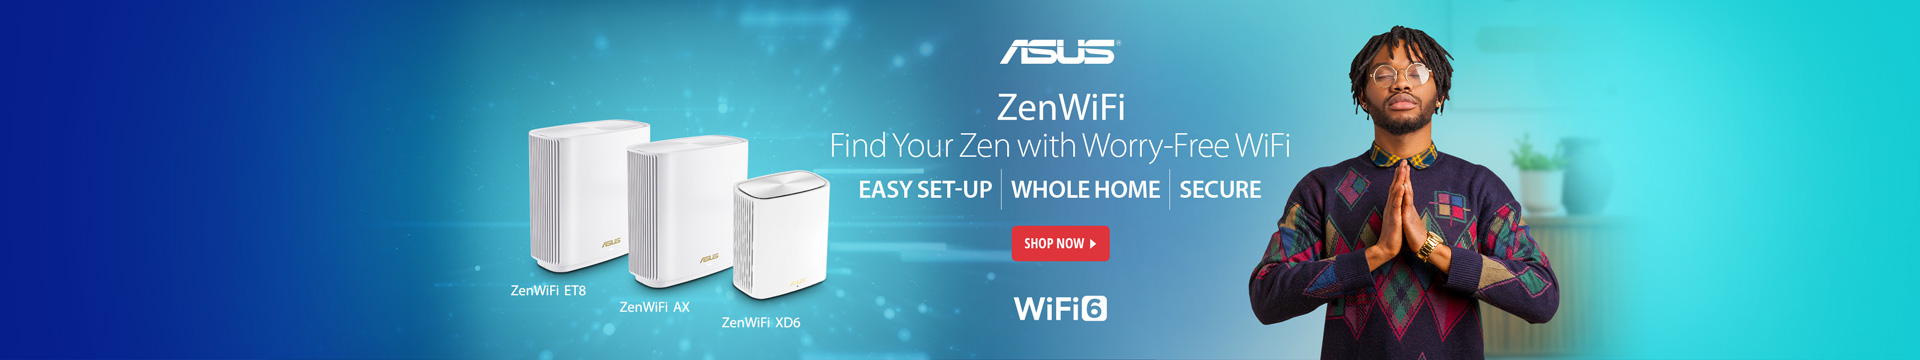 ZenWiFi find your Zen with worry-free WiFi